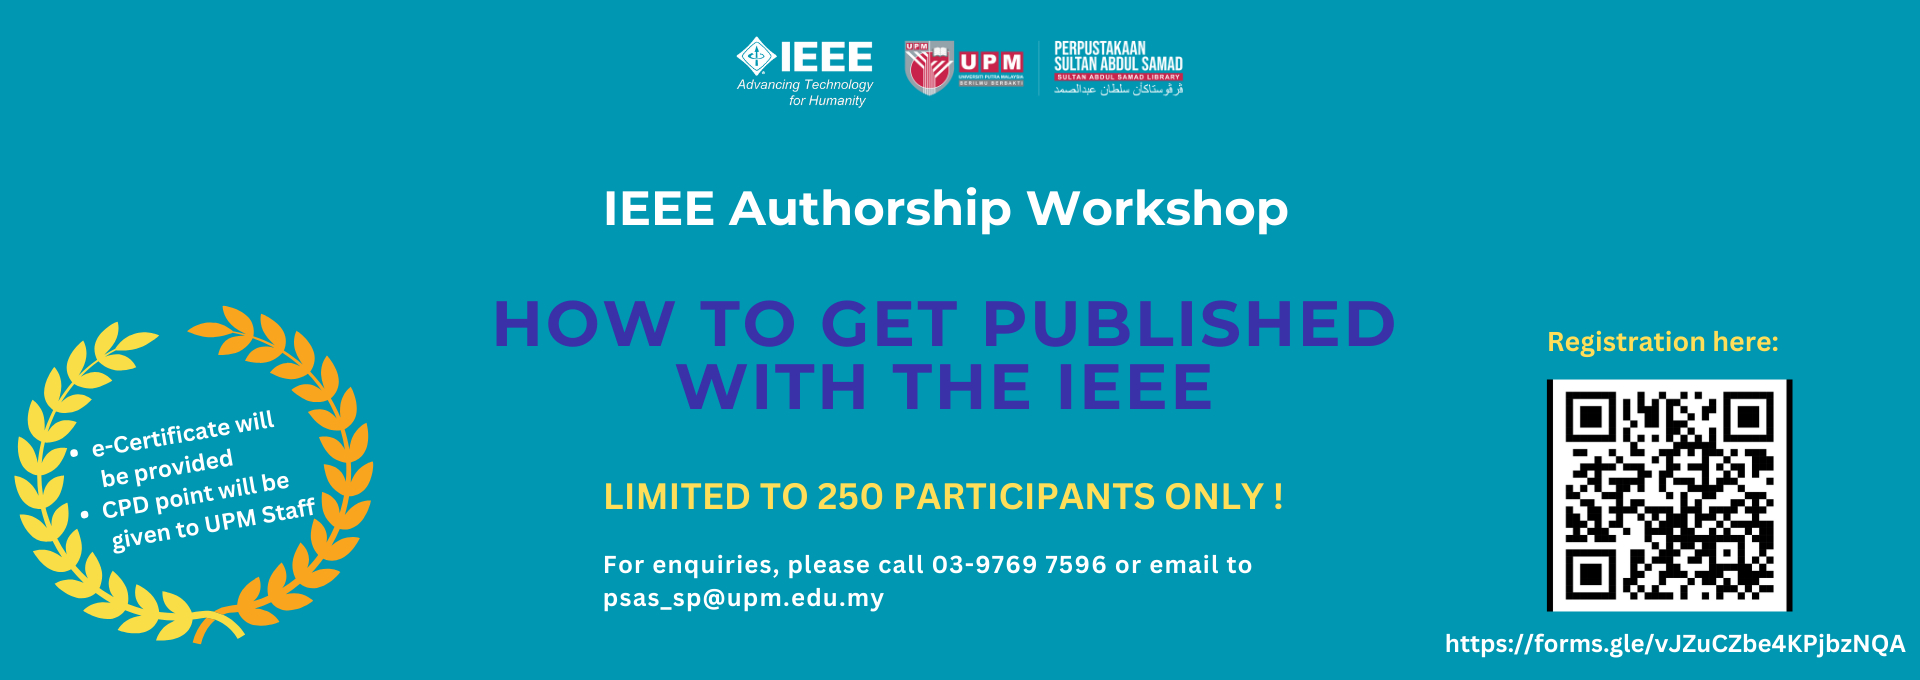 IEEE Authorship Workshop